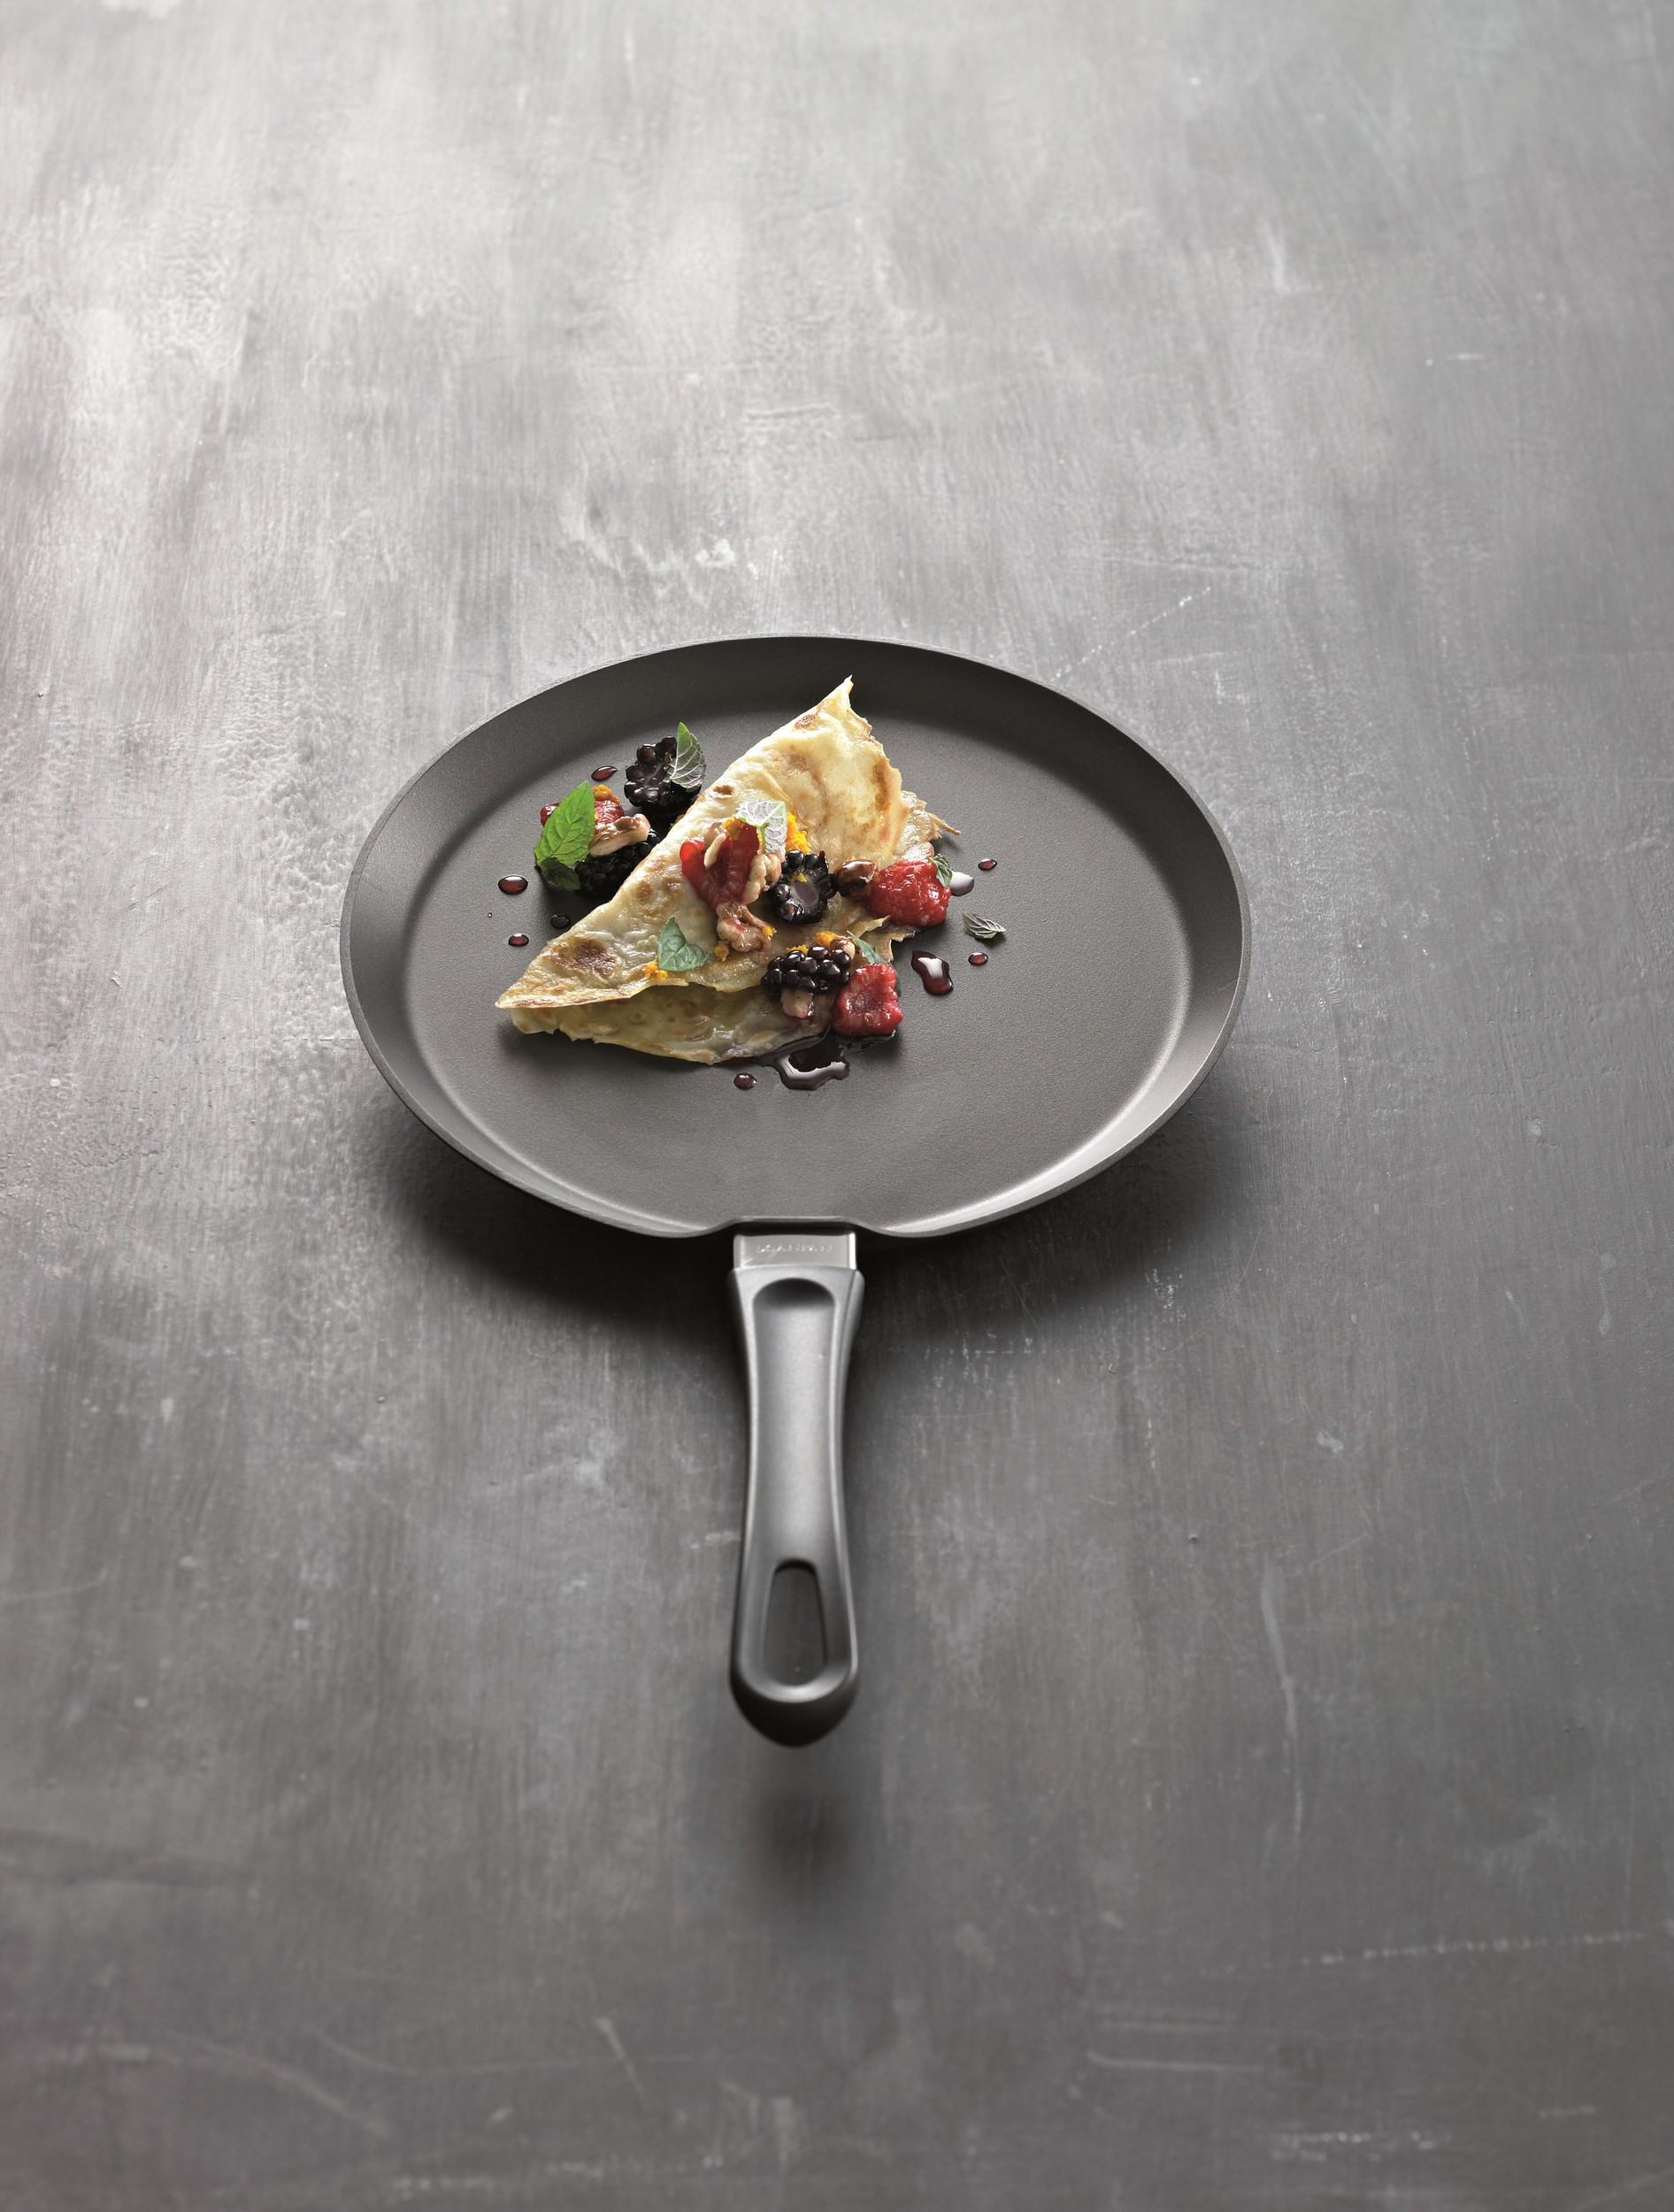 25cm Omelette/Crepe Pan - Classic